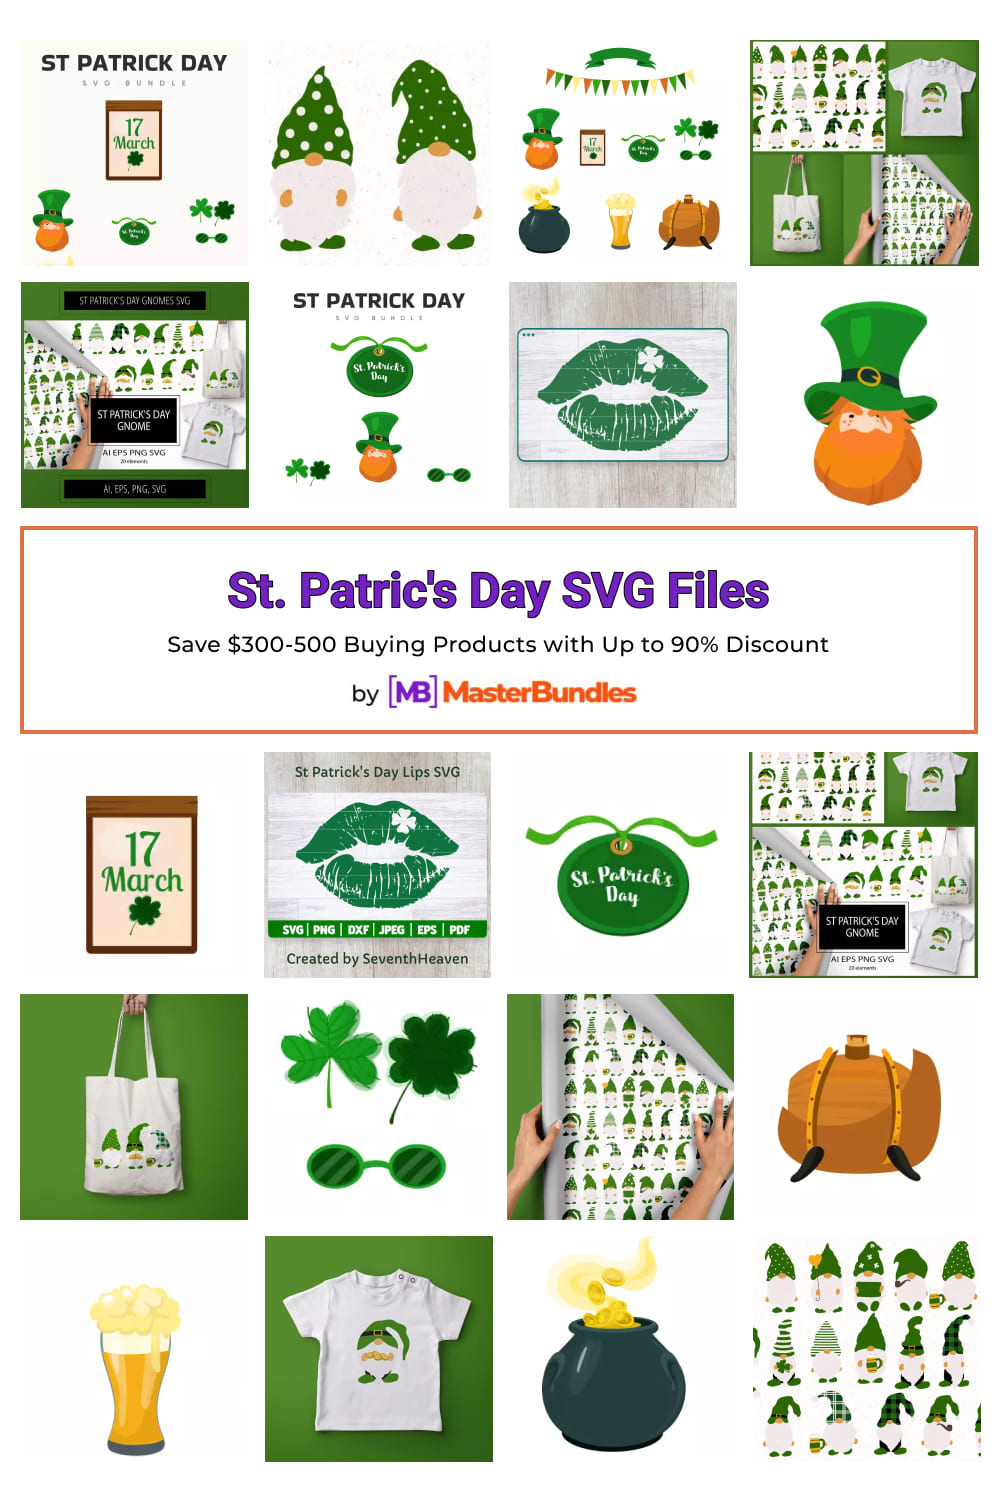 St. Patric's Day SVG Files Pinterest image.